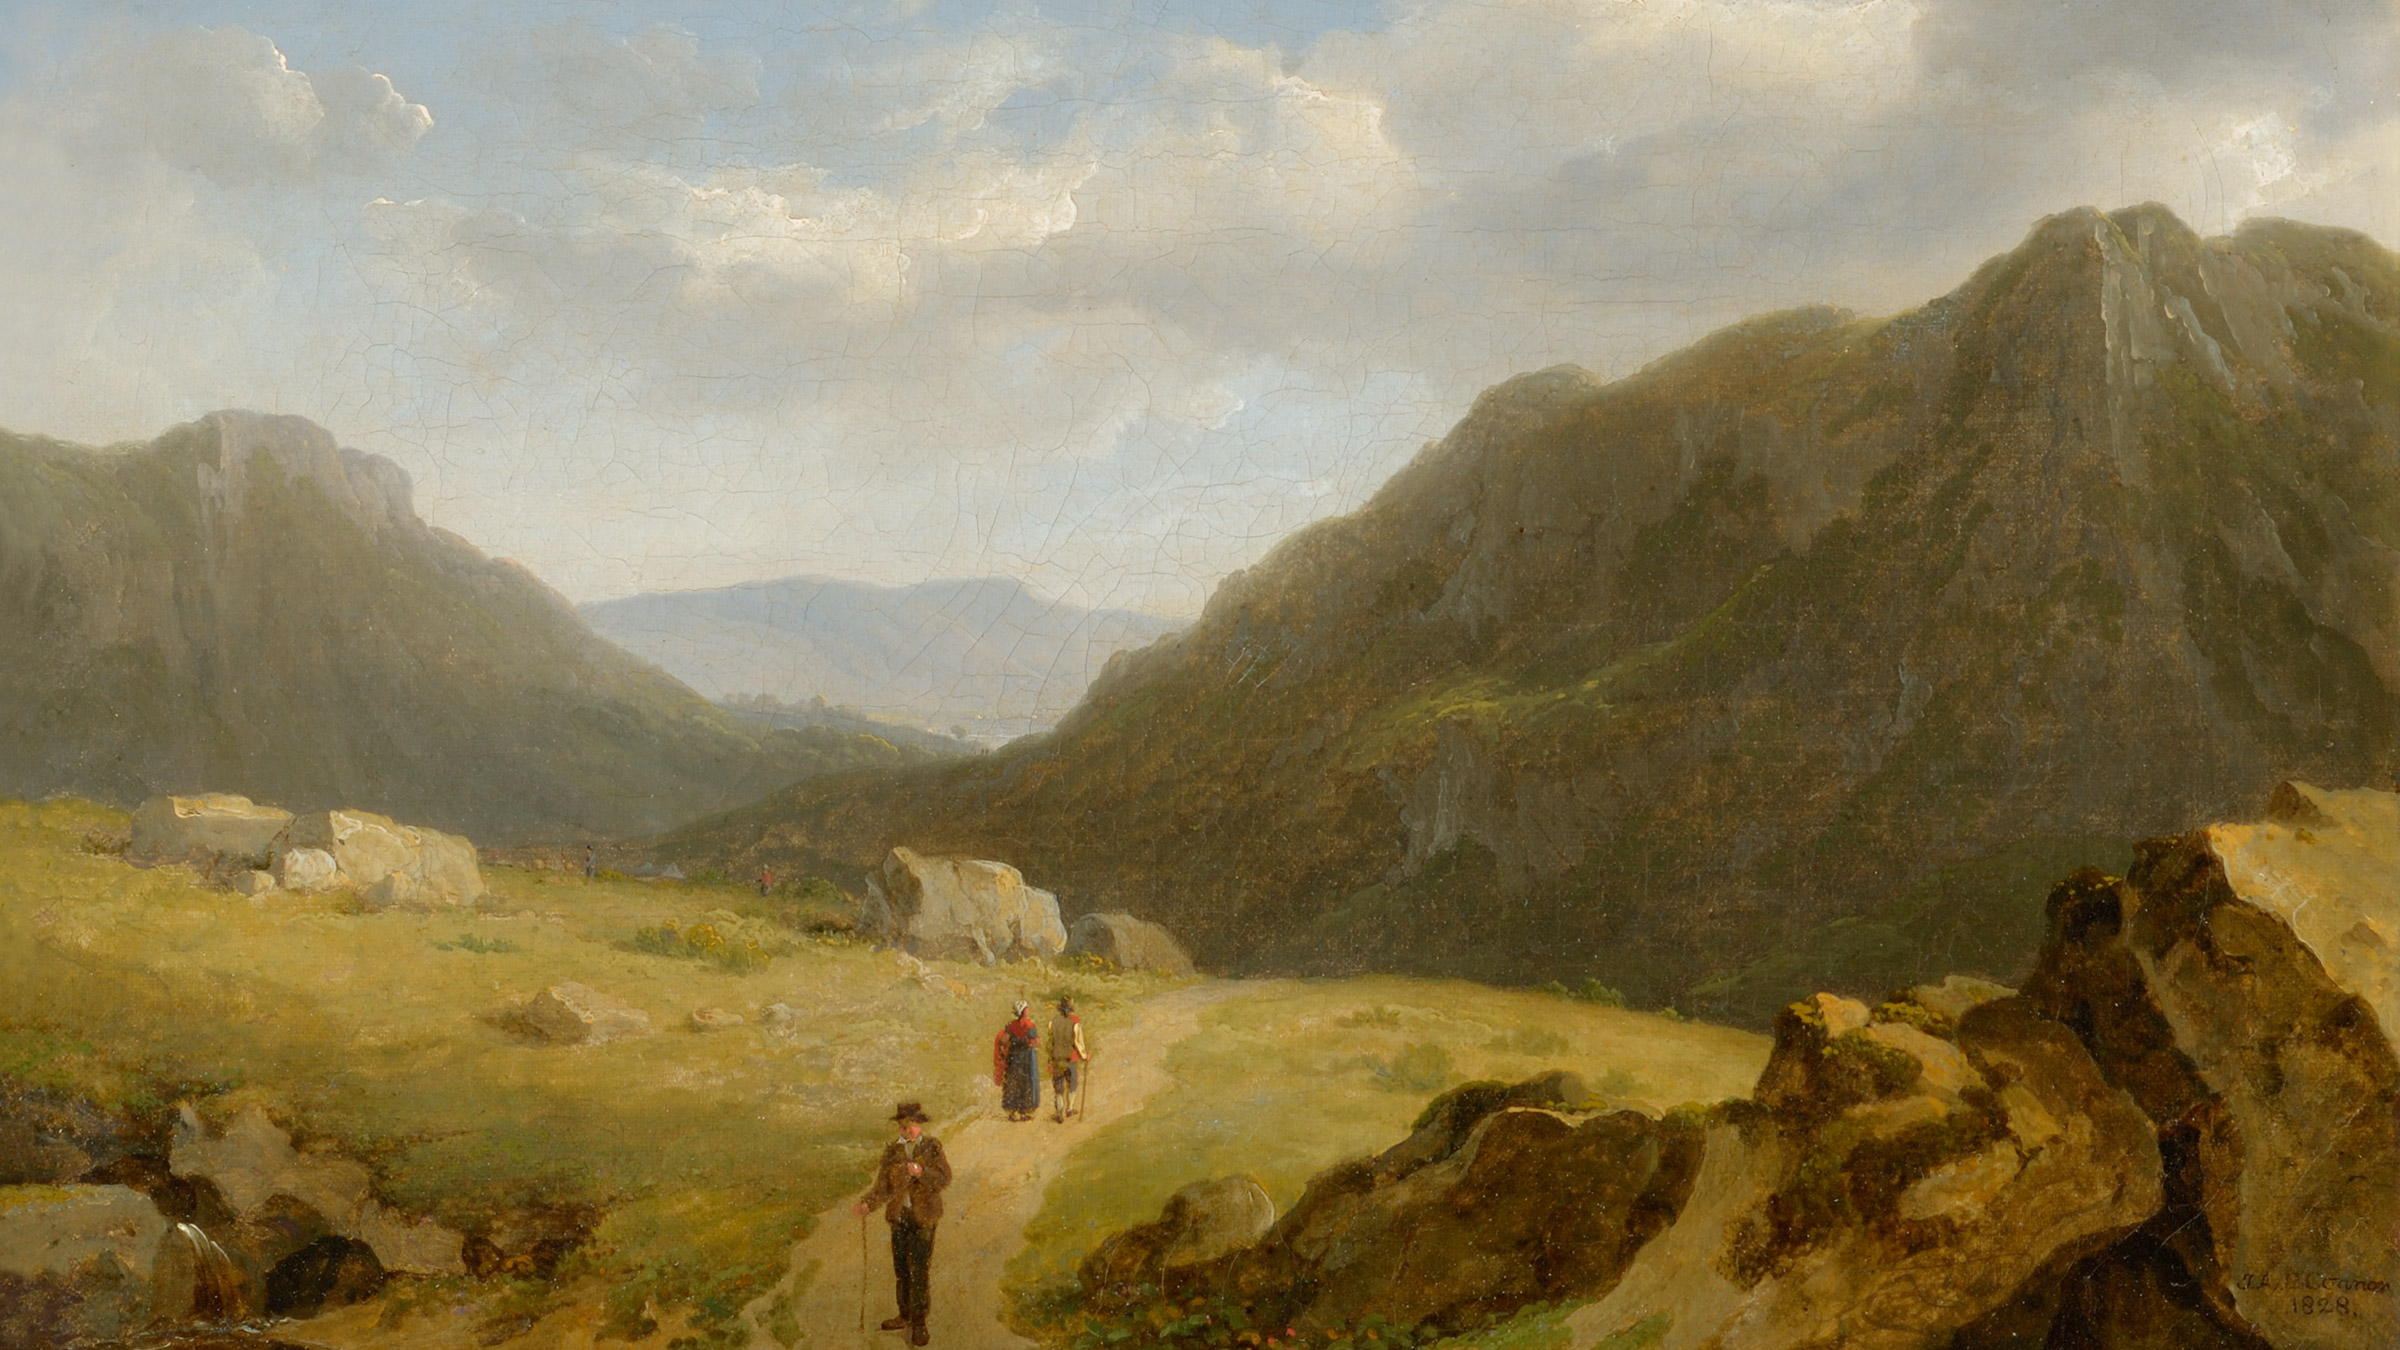 Scene in Connemara  Oil on canvas. 1828. Photo by Frank Poole.  James Arthur O'Connor Copyright Frank Poole 2012